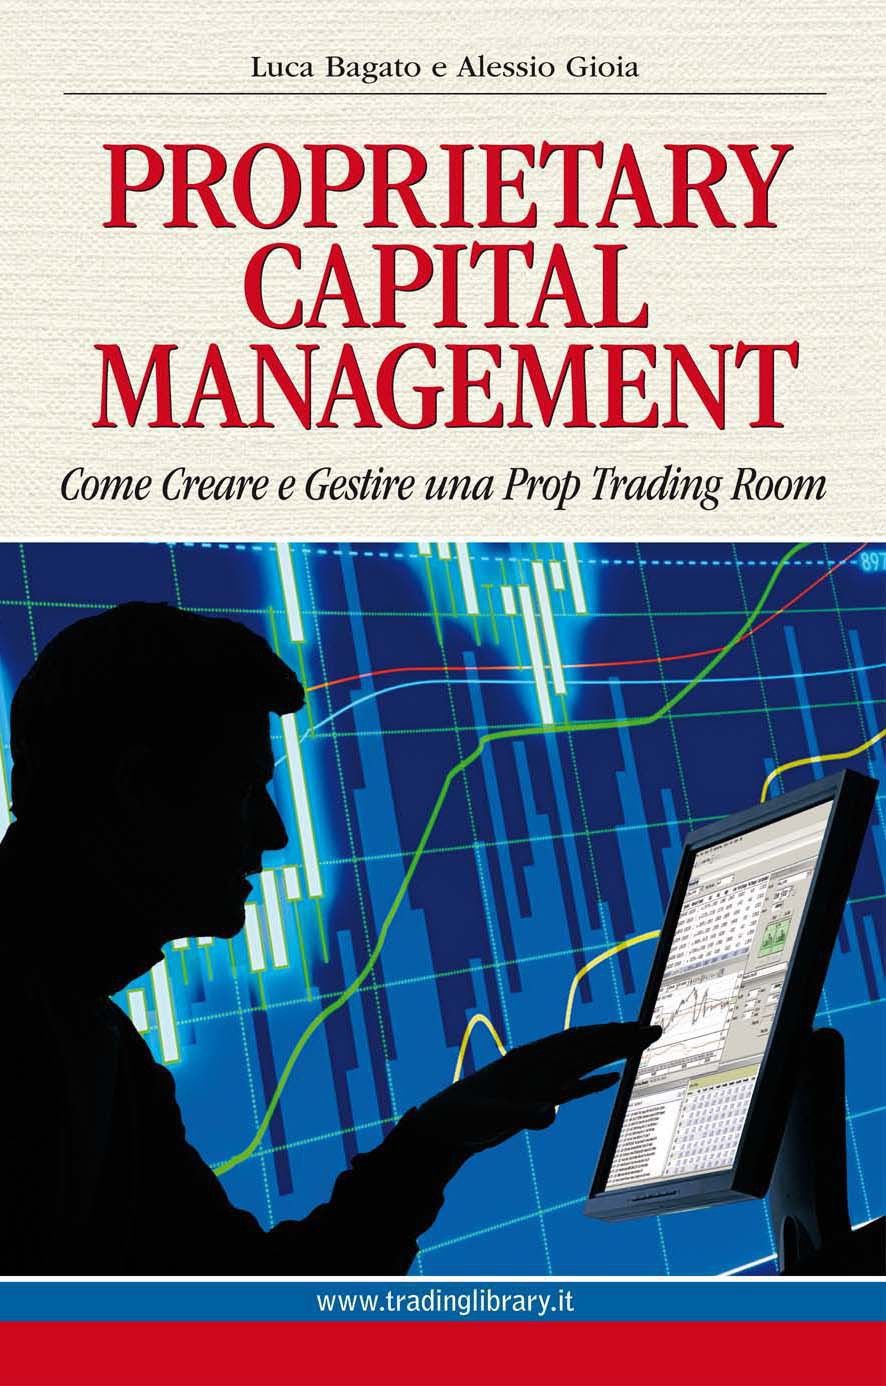 Proprietary capital management